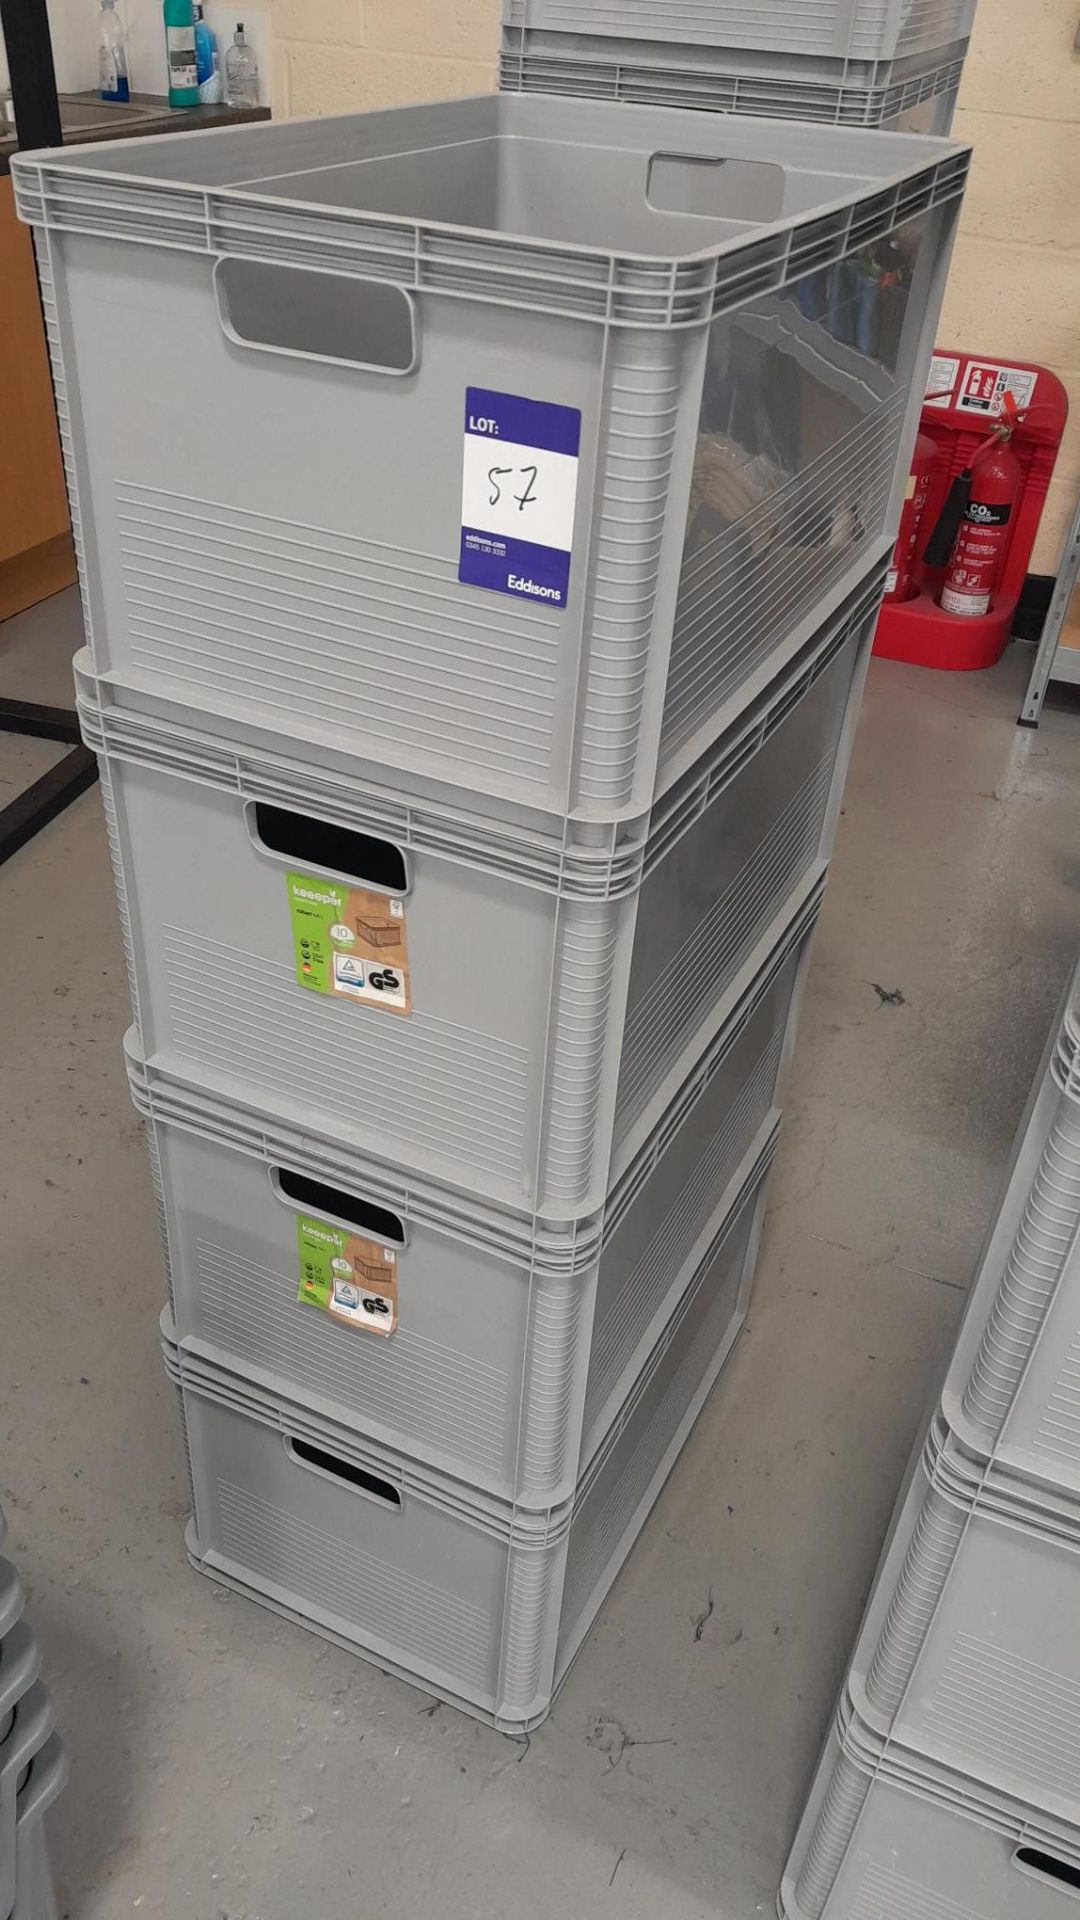 4 x Keeeper Robert 64litre storage boxes